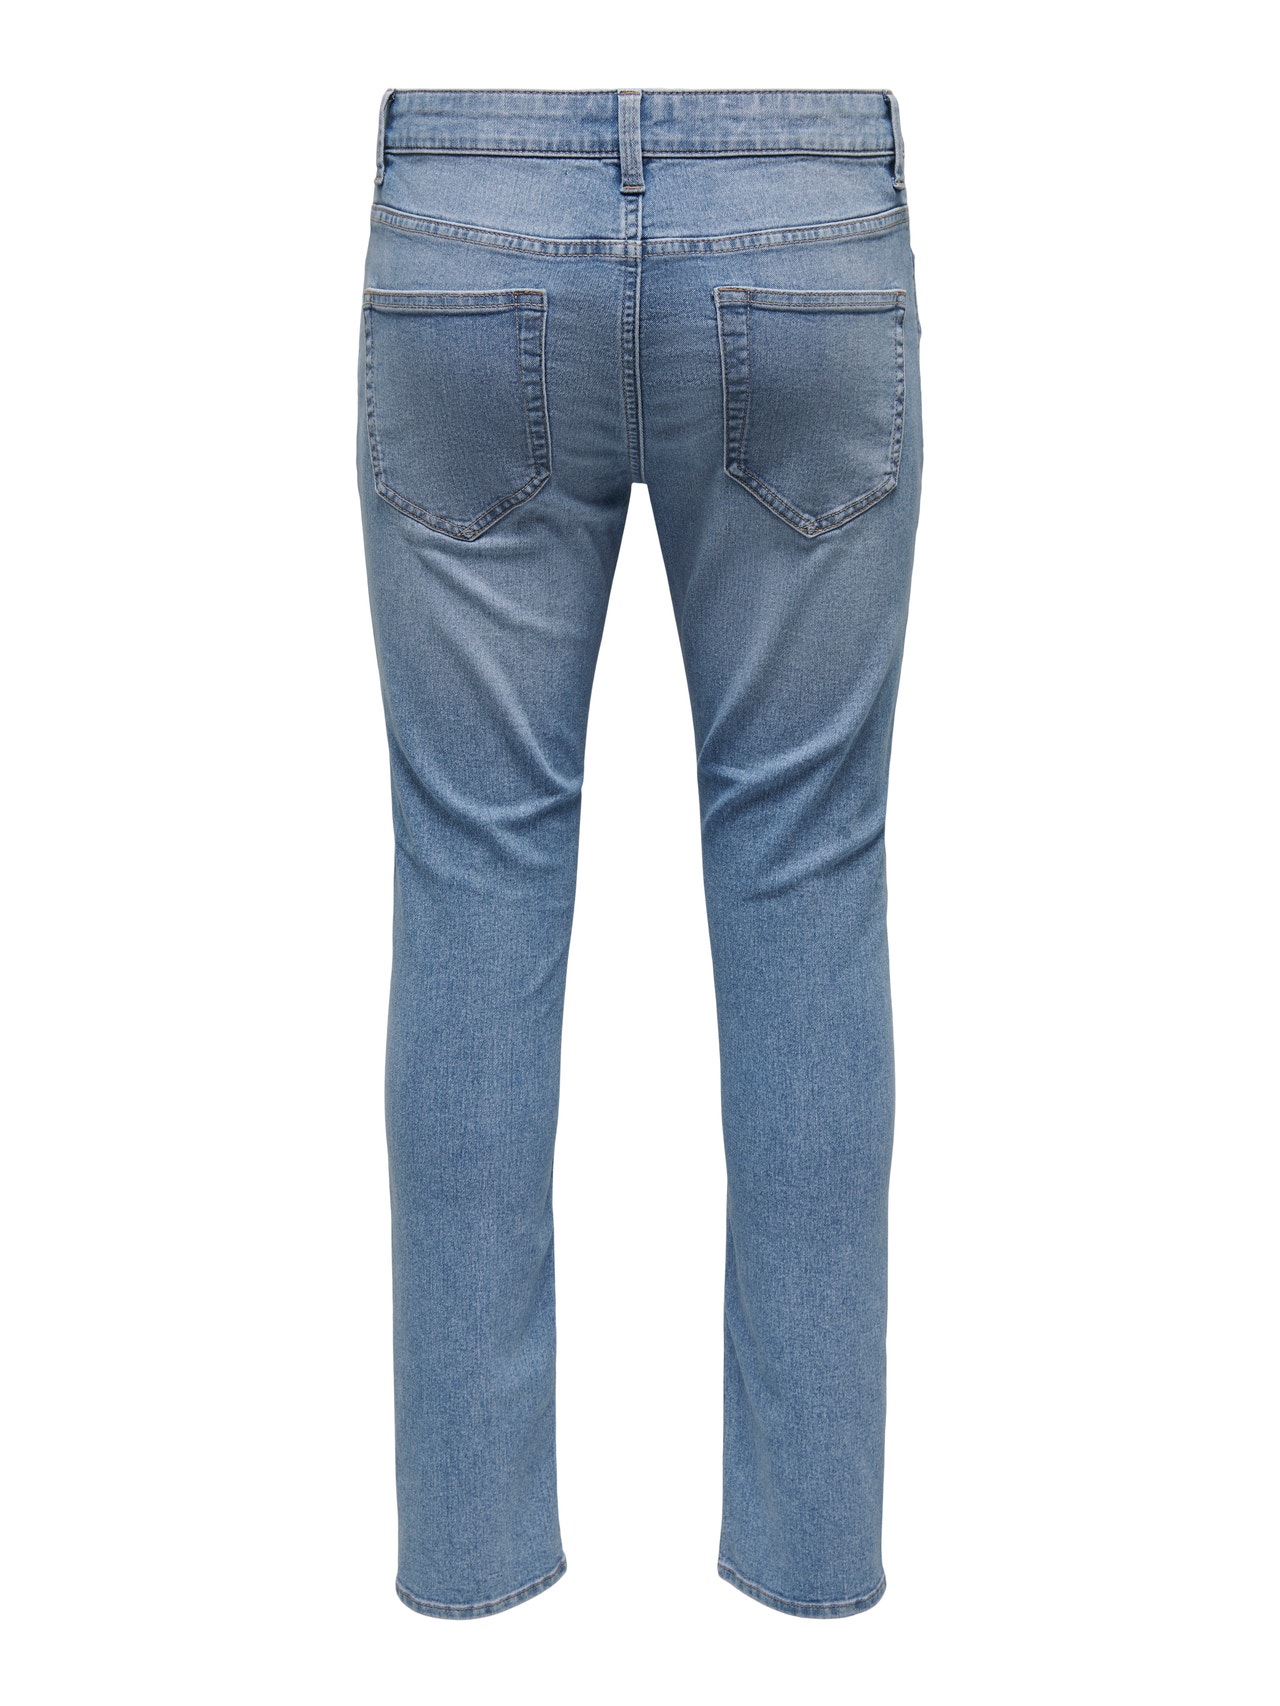 ONLY & SONS Slim Fit Mid rise Jeans -Light Blue Denim - 22027899